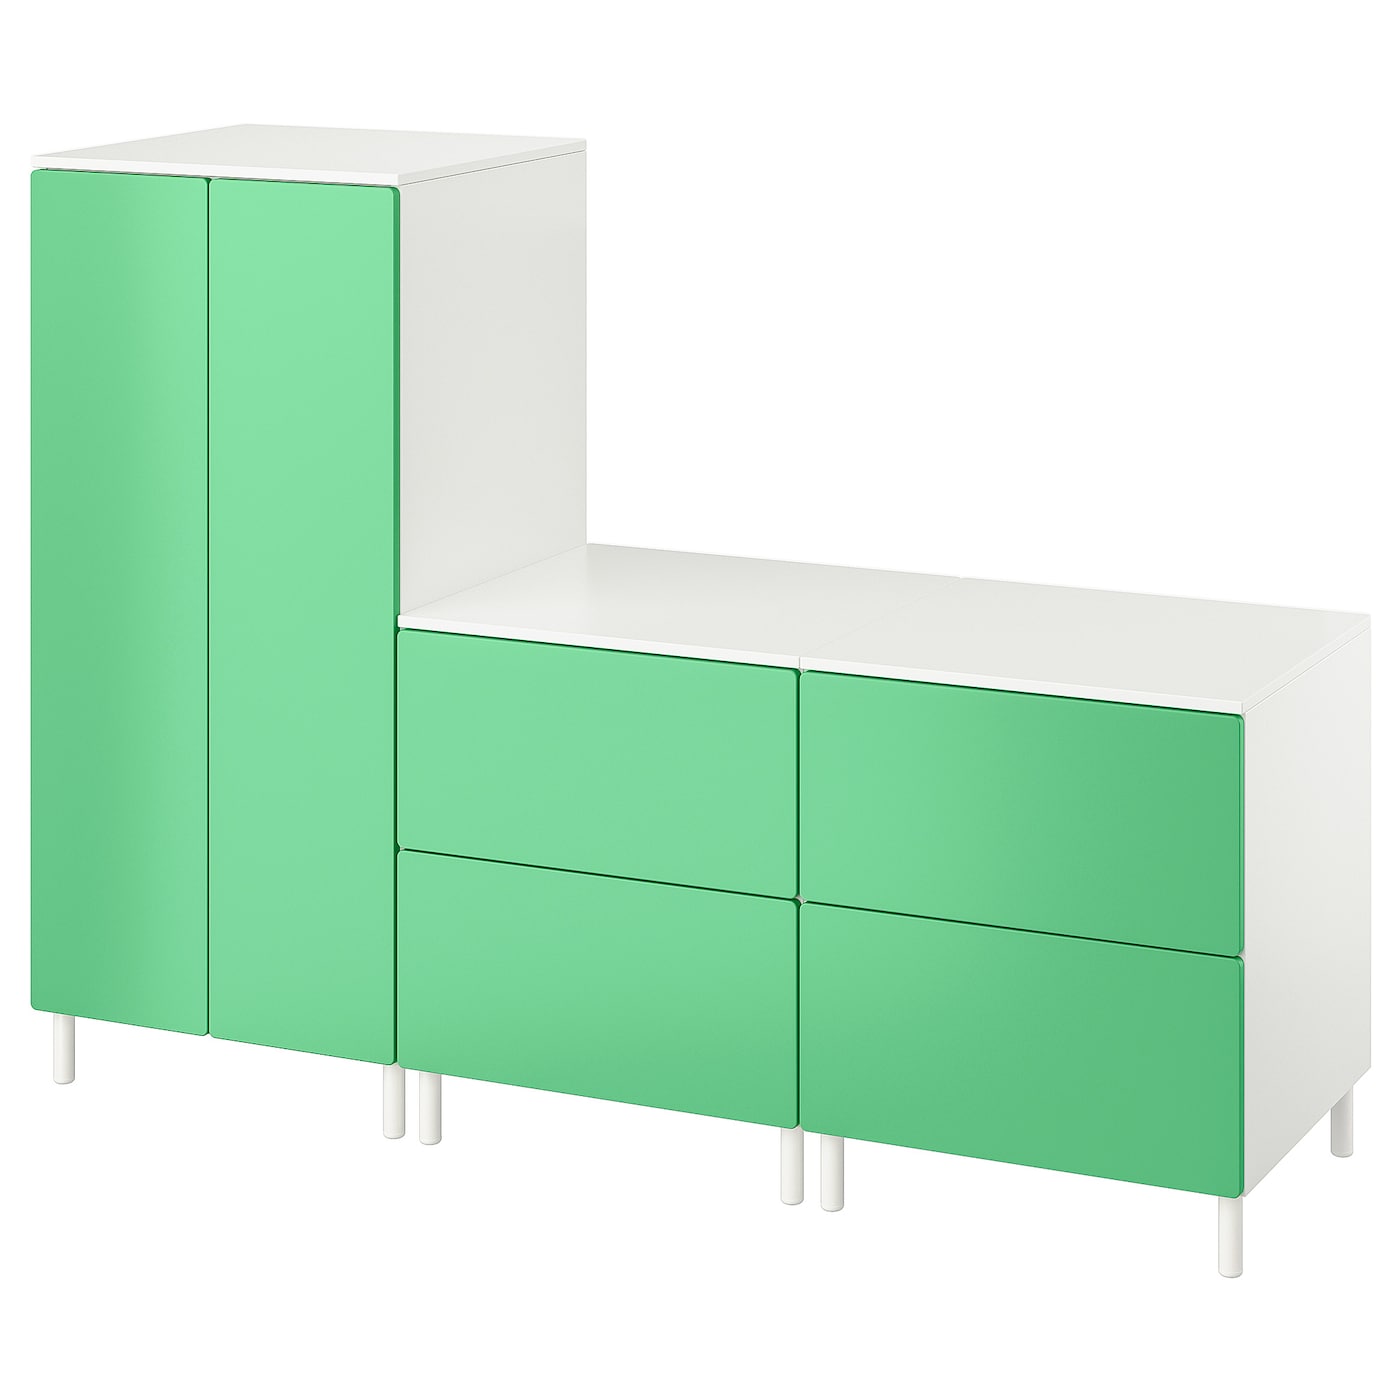 Шкаф - PLATSA/ SMÅSTAD / SMАSTAD  IKEA/ ПЛАТСА/СМОСТАД  ИКЕА, 180x57x133 см, белый/зеленый